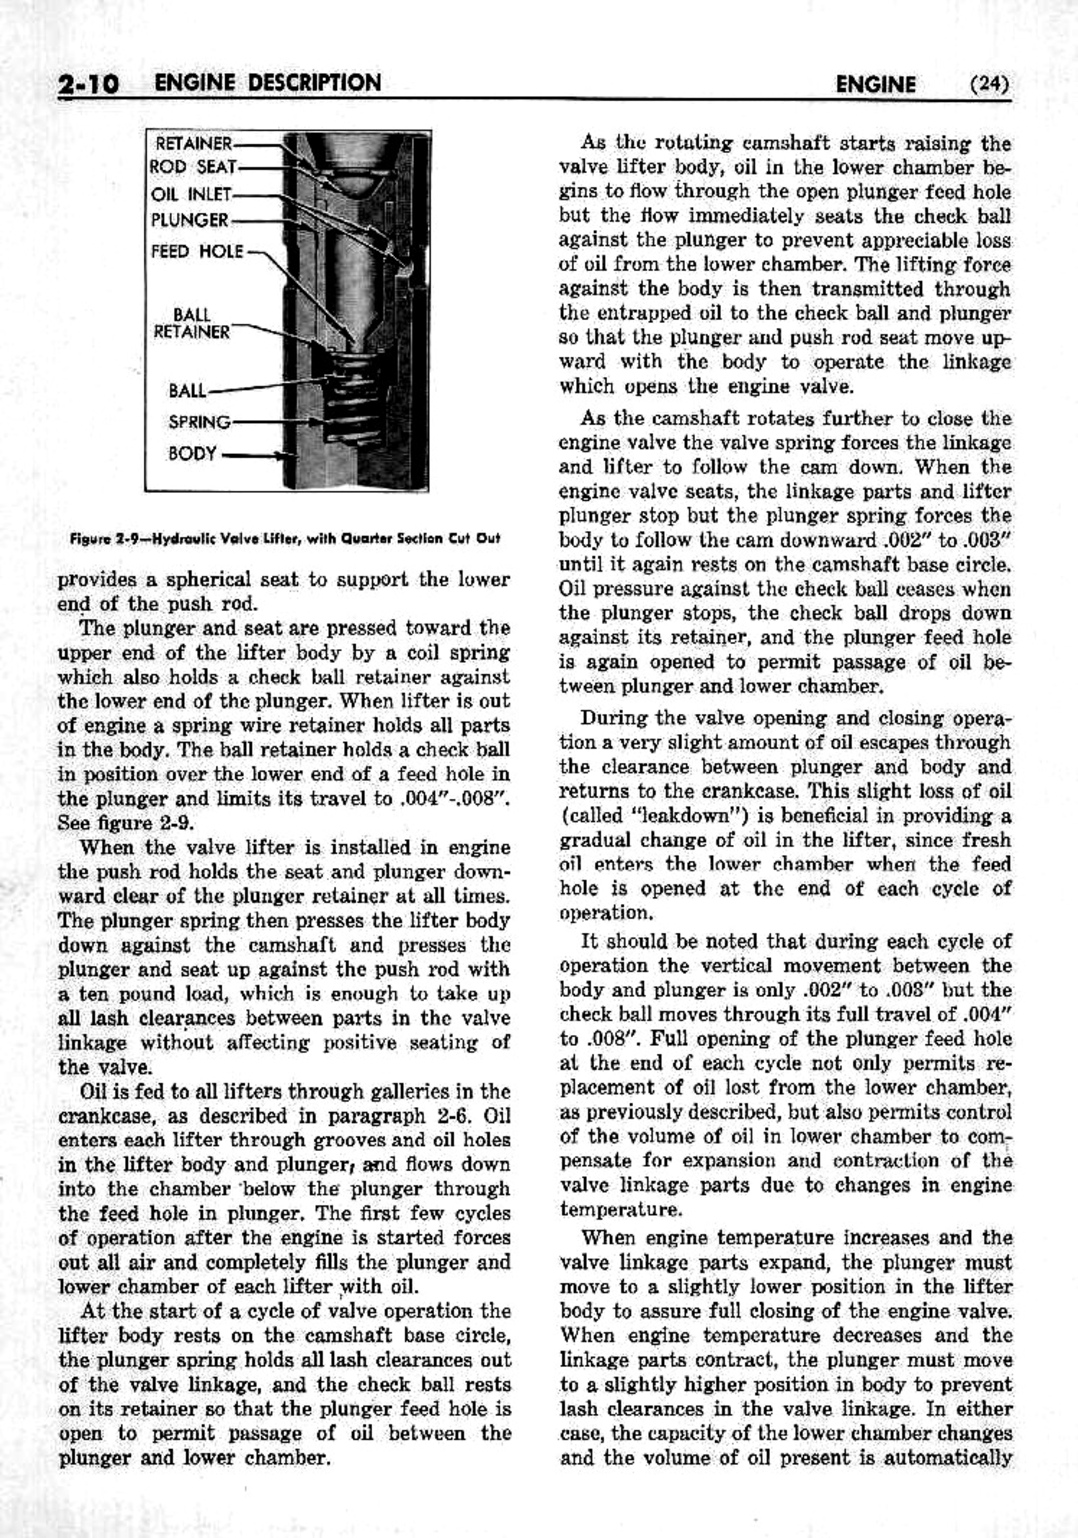 n_03 1953 Buick Shop Manual - Engine-010-010.jpg